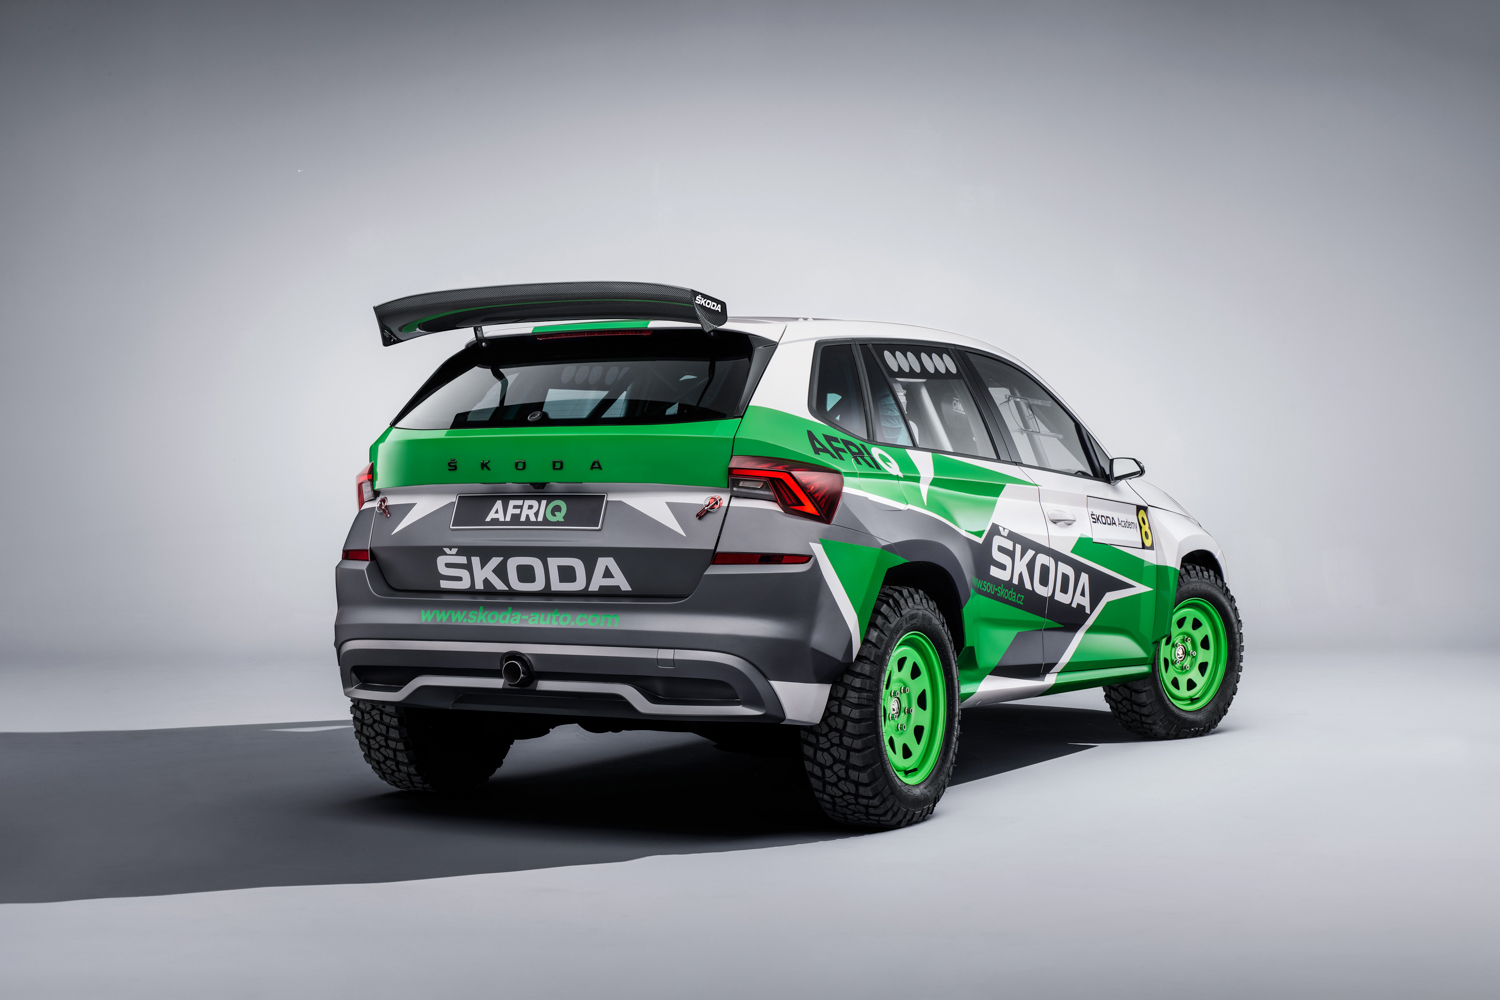 Skoda Afriq is the latest Student Concept car